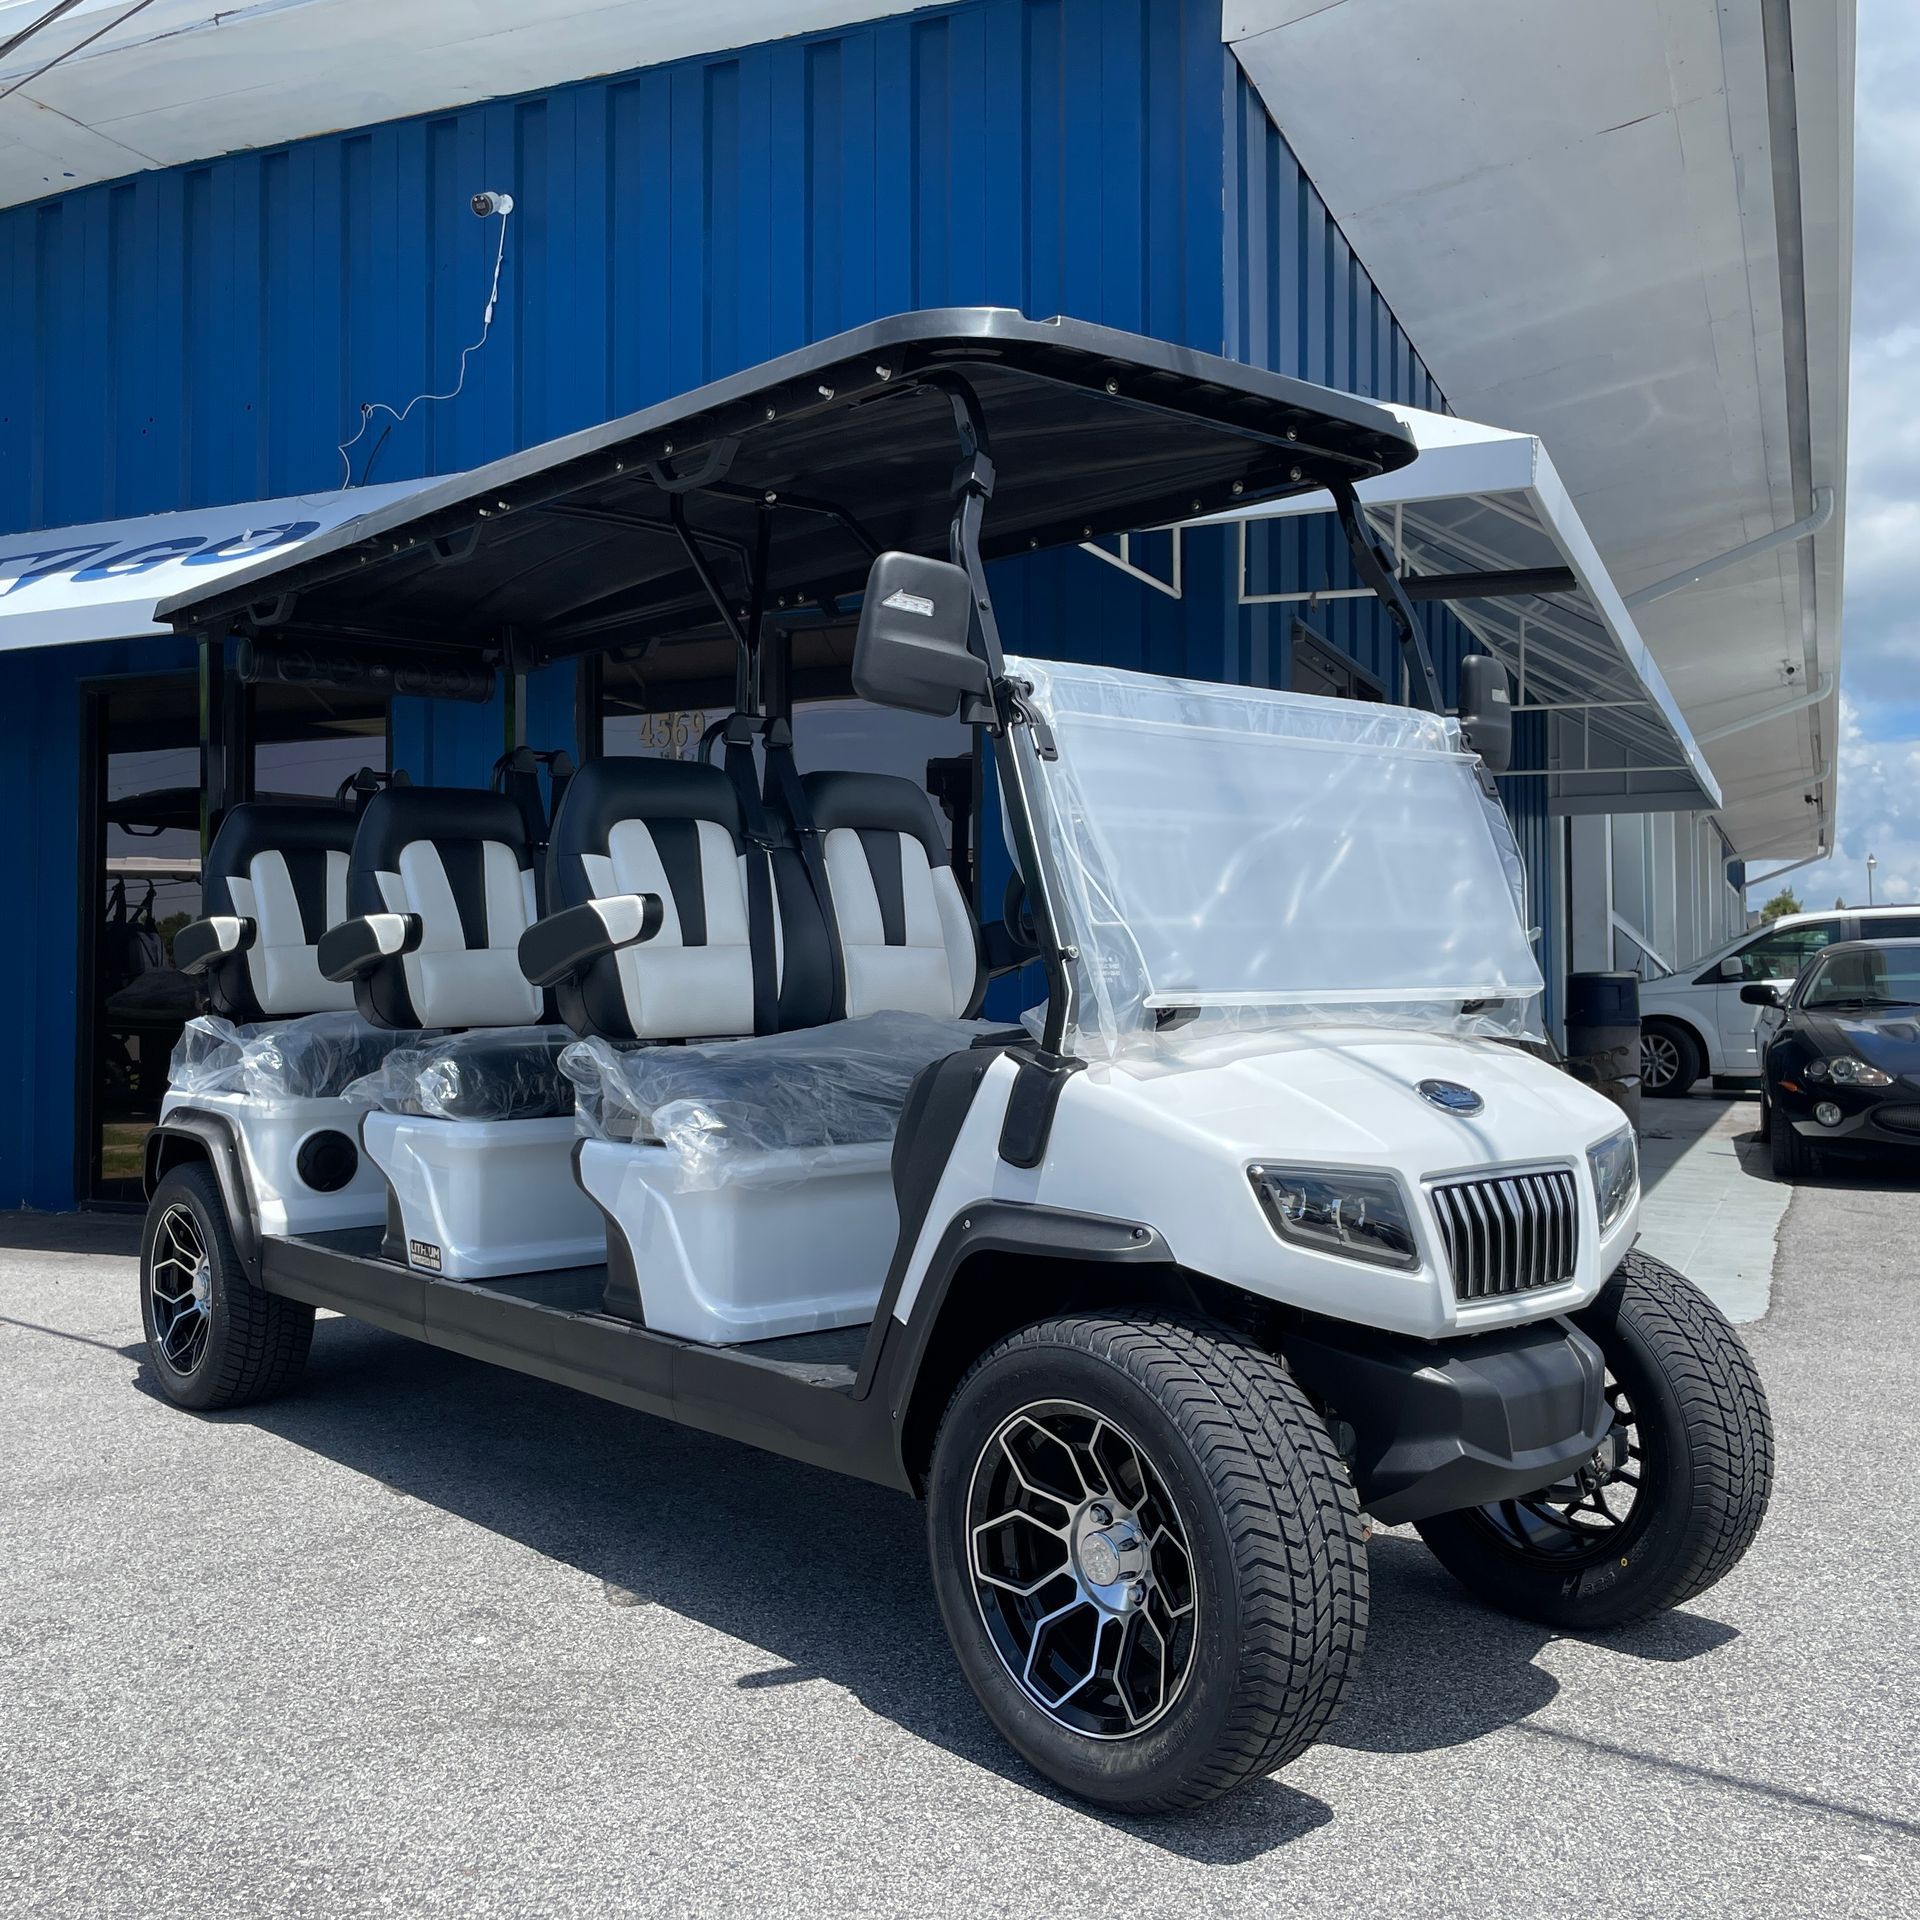 Purple custom golf cart - custom golf cart sales in St. Petersburg, FL